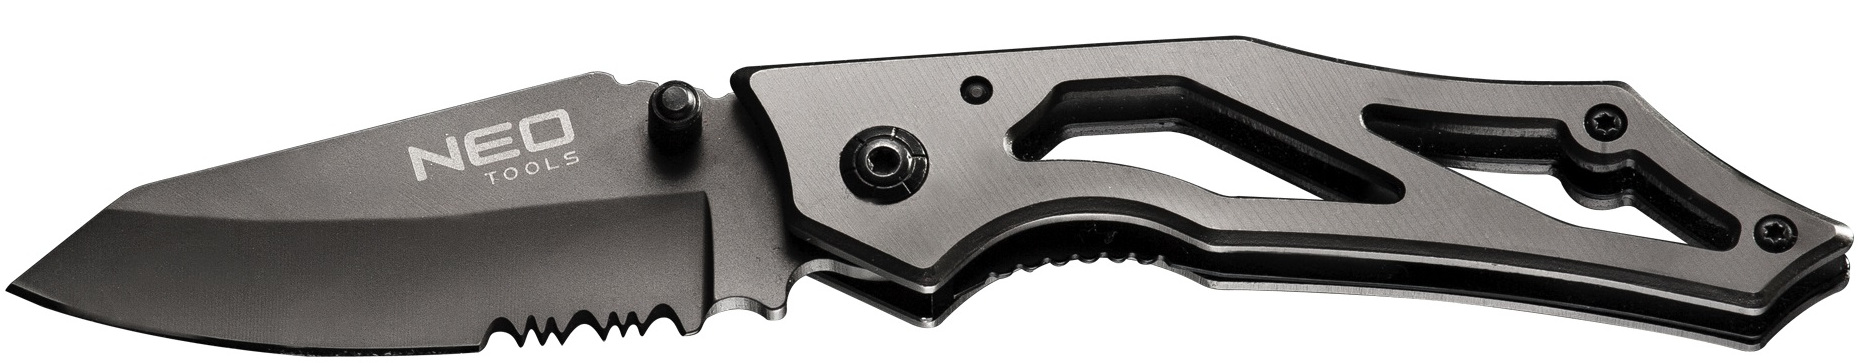 Нож нескладной Neo Tools 63-025